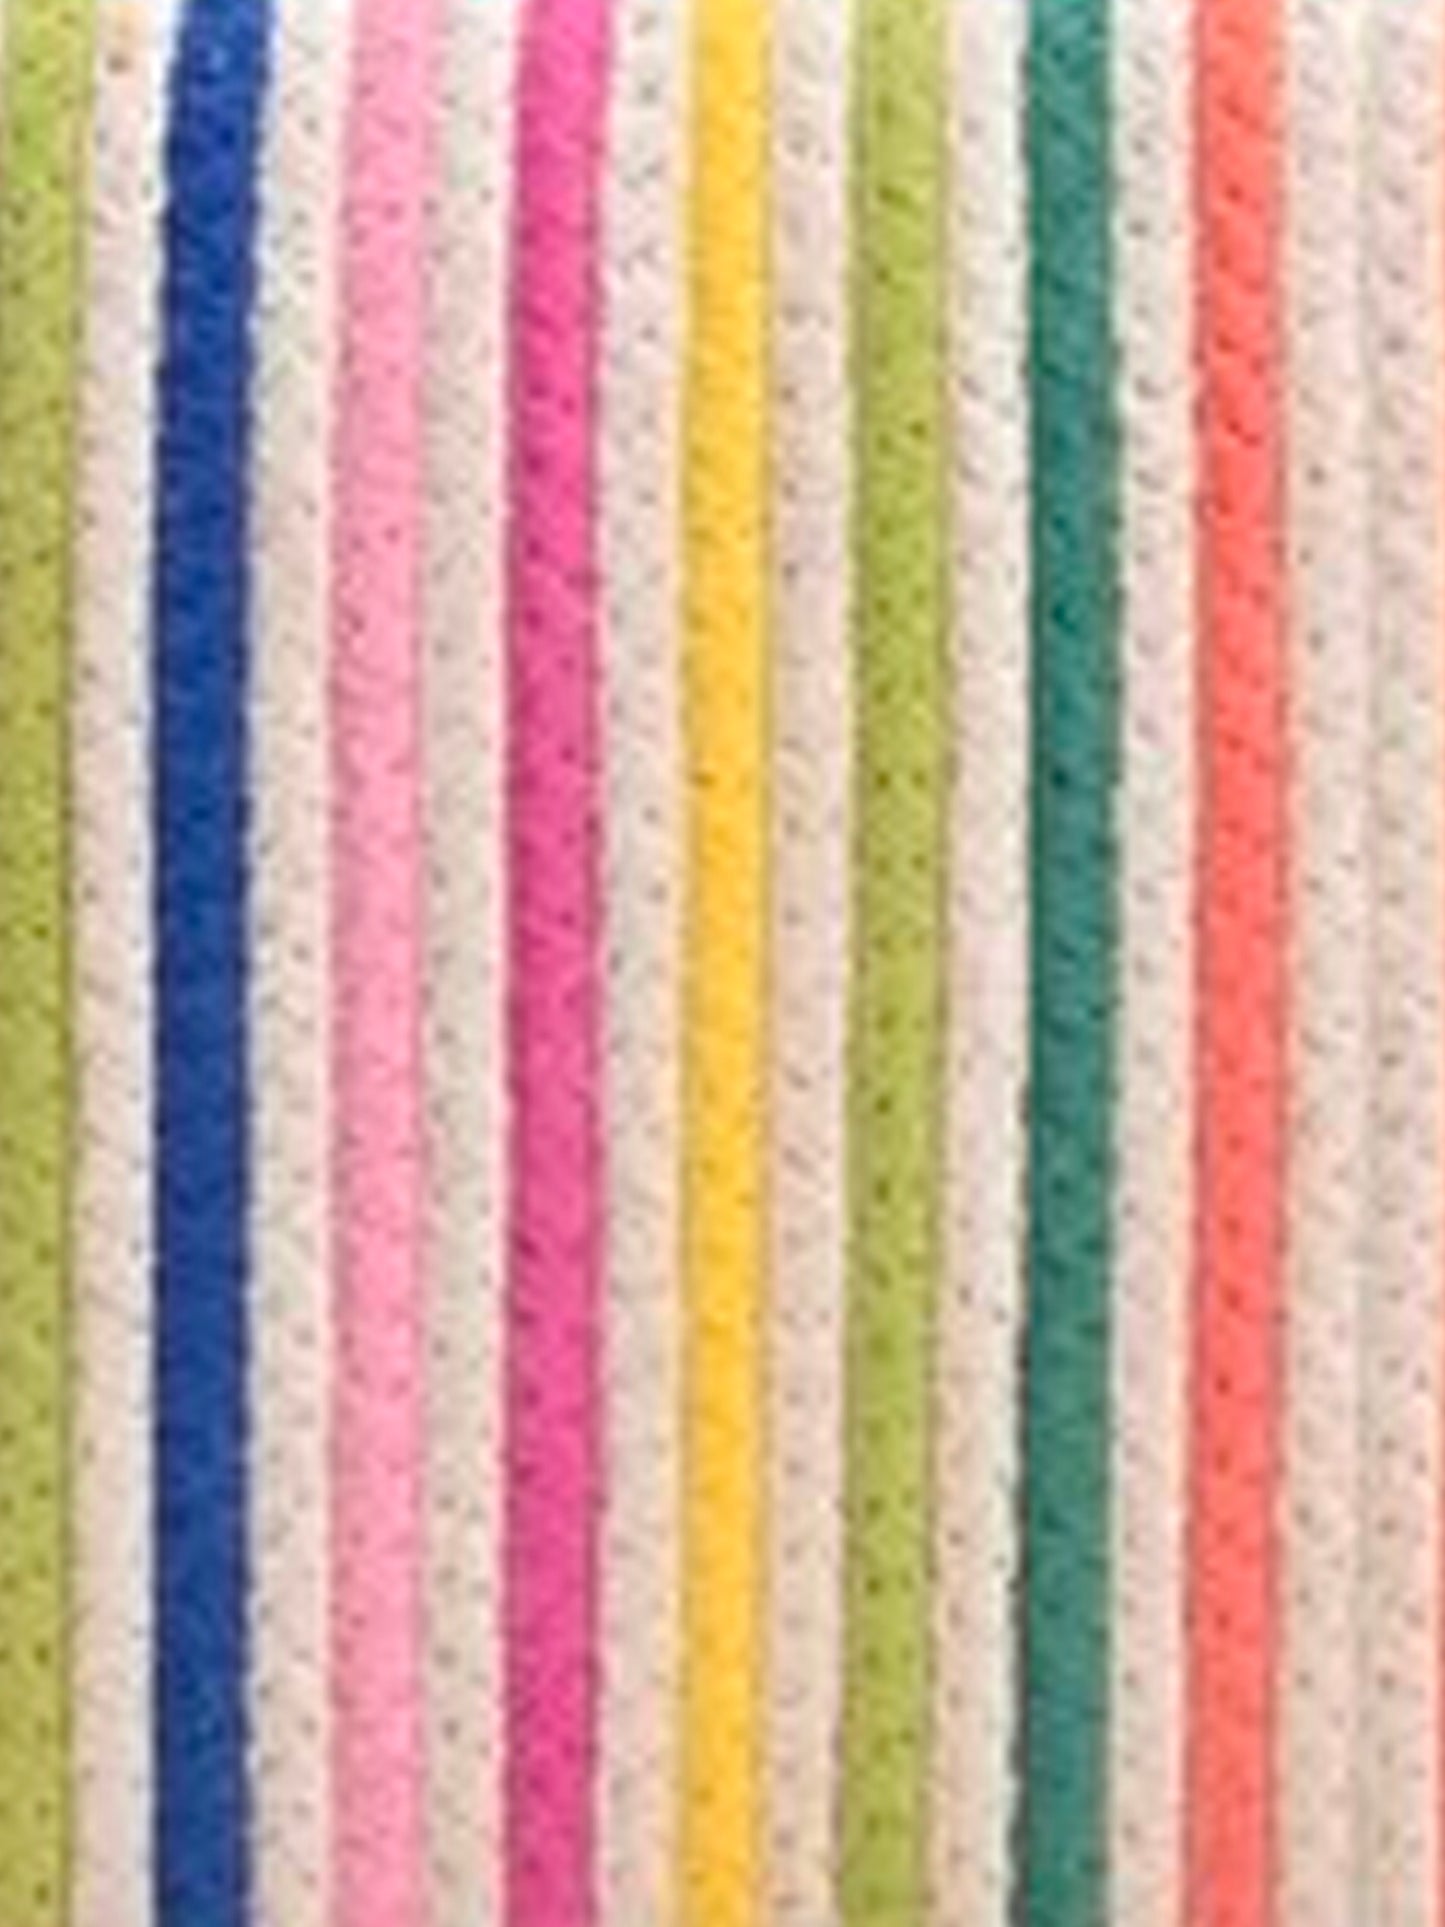 The Rainbow Embellished Purse pattern